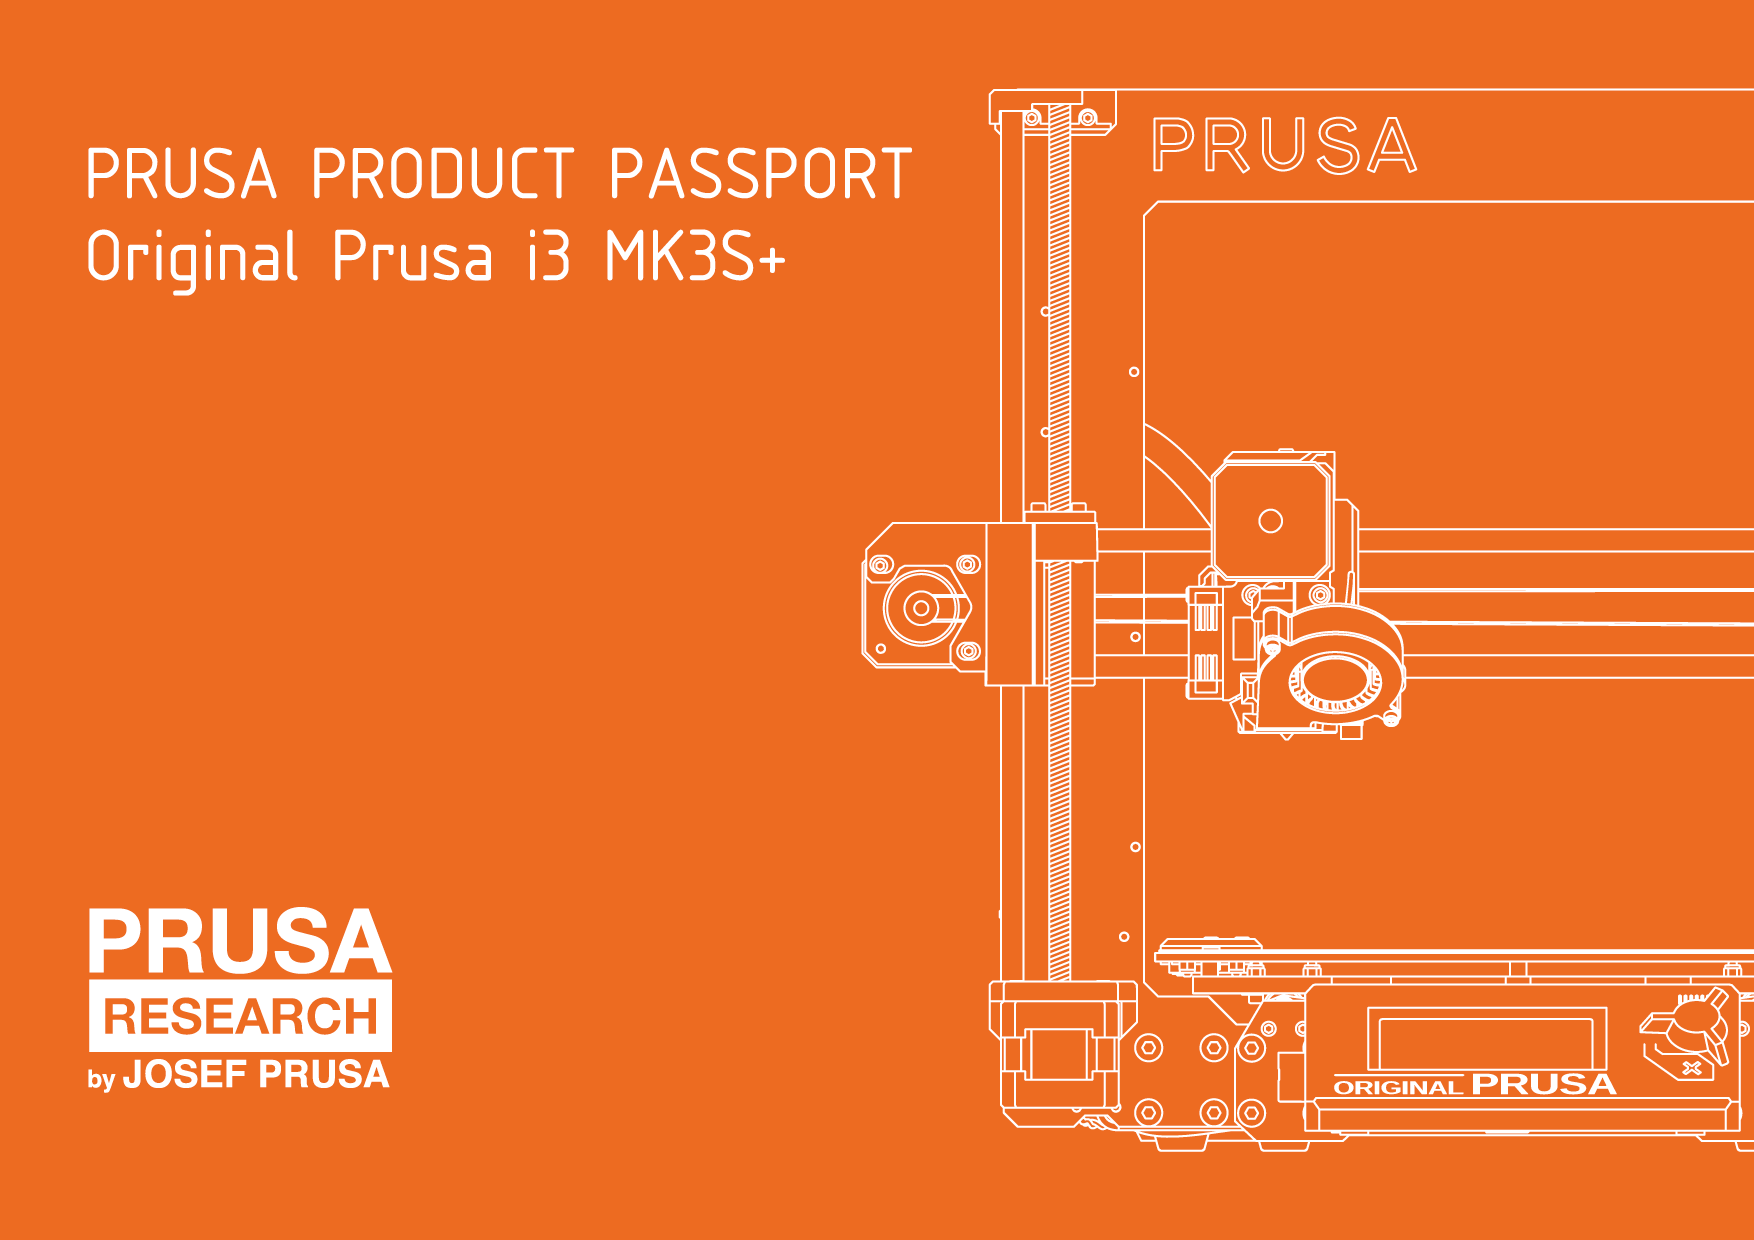 Prusa Product Passport